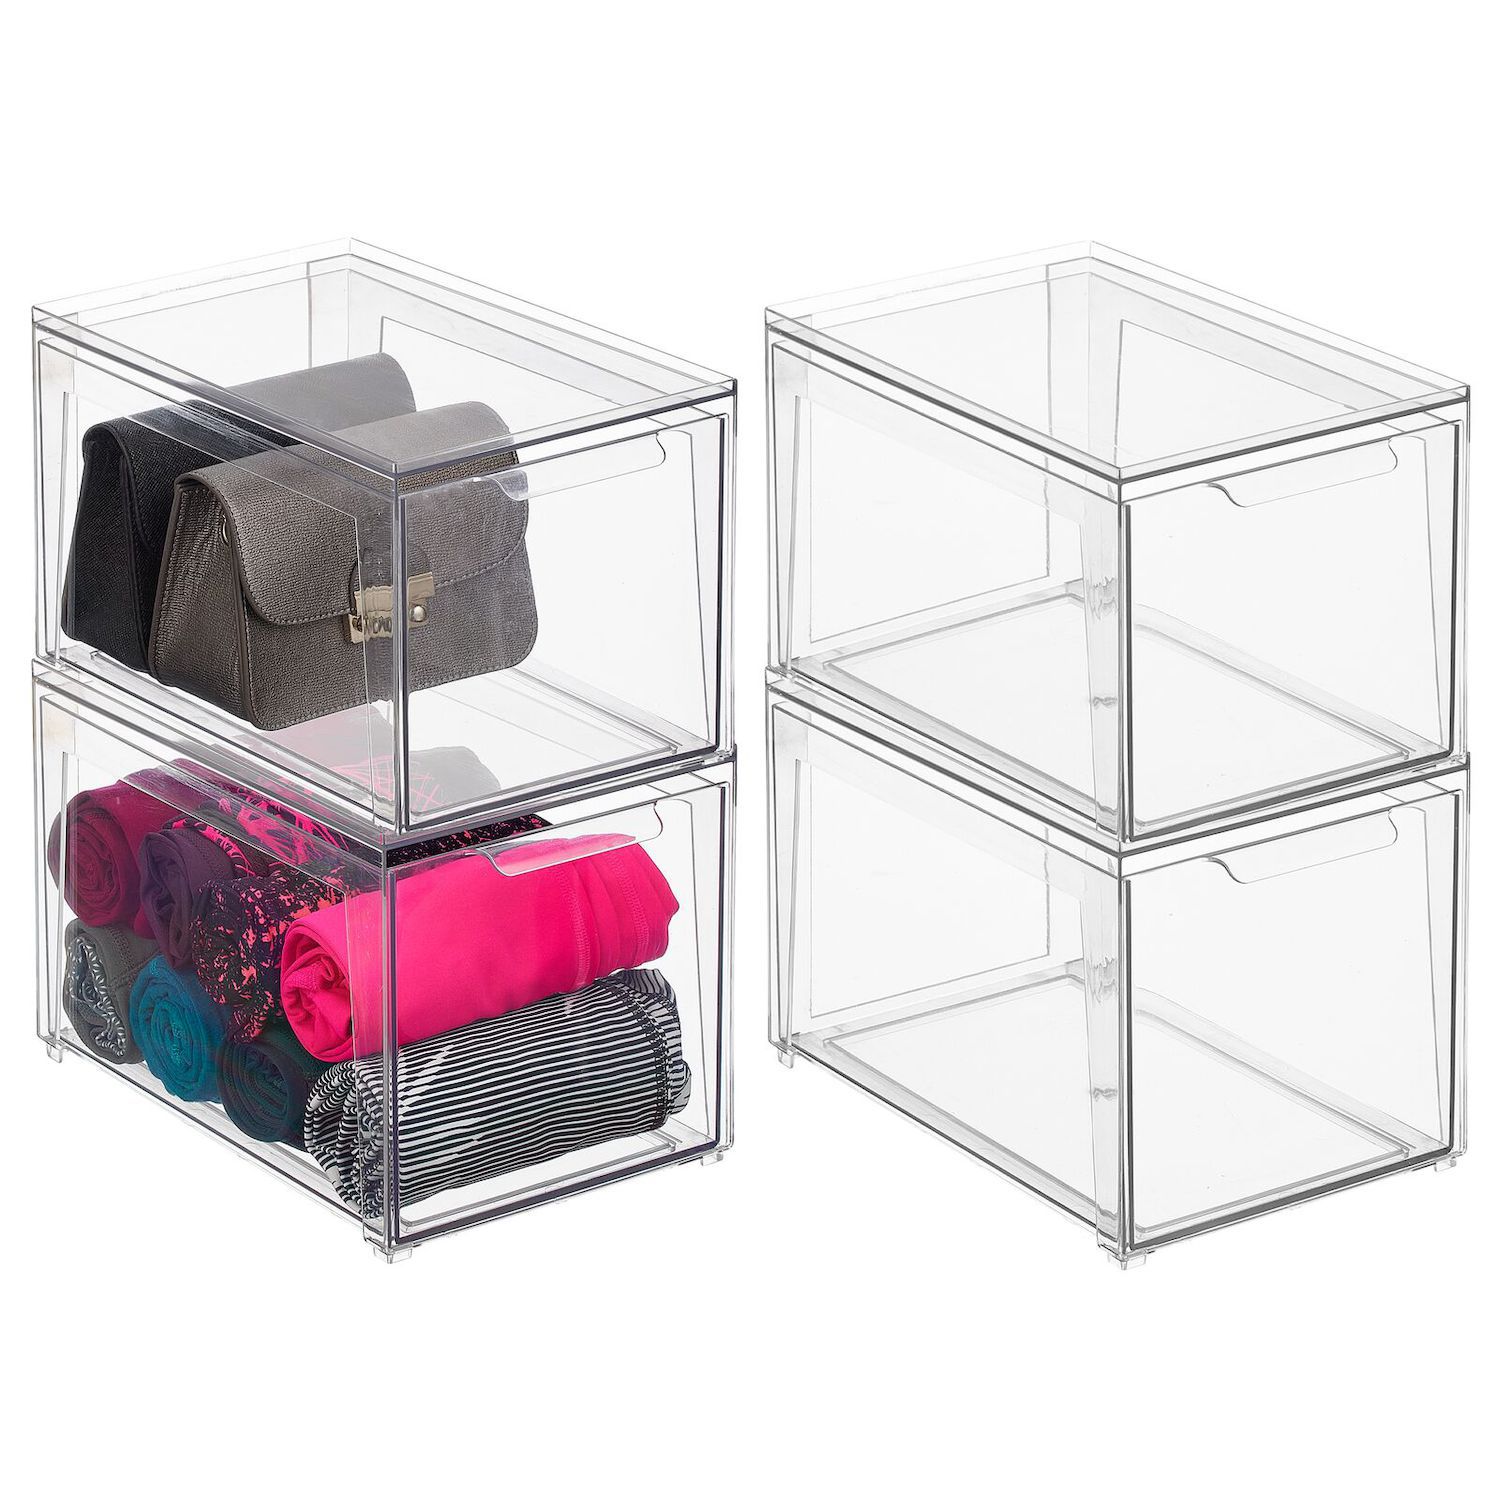 Mdesign Linus Formbu Clear Plastic Stackable Storage Organizer Bin